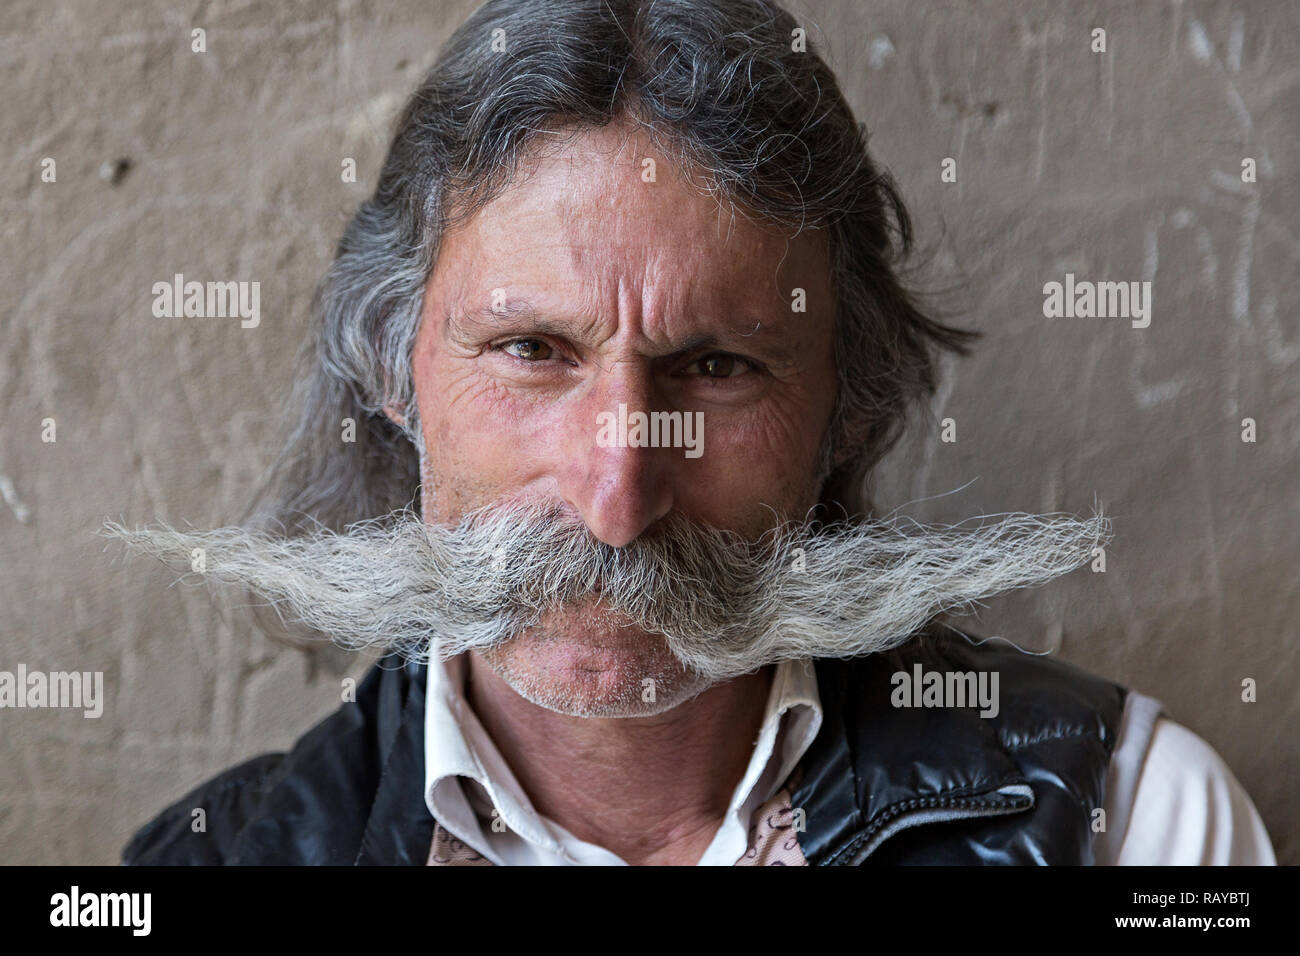 Armenian man with a big mustache, in Yerevan, Armenia. Stock Photo